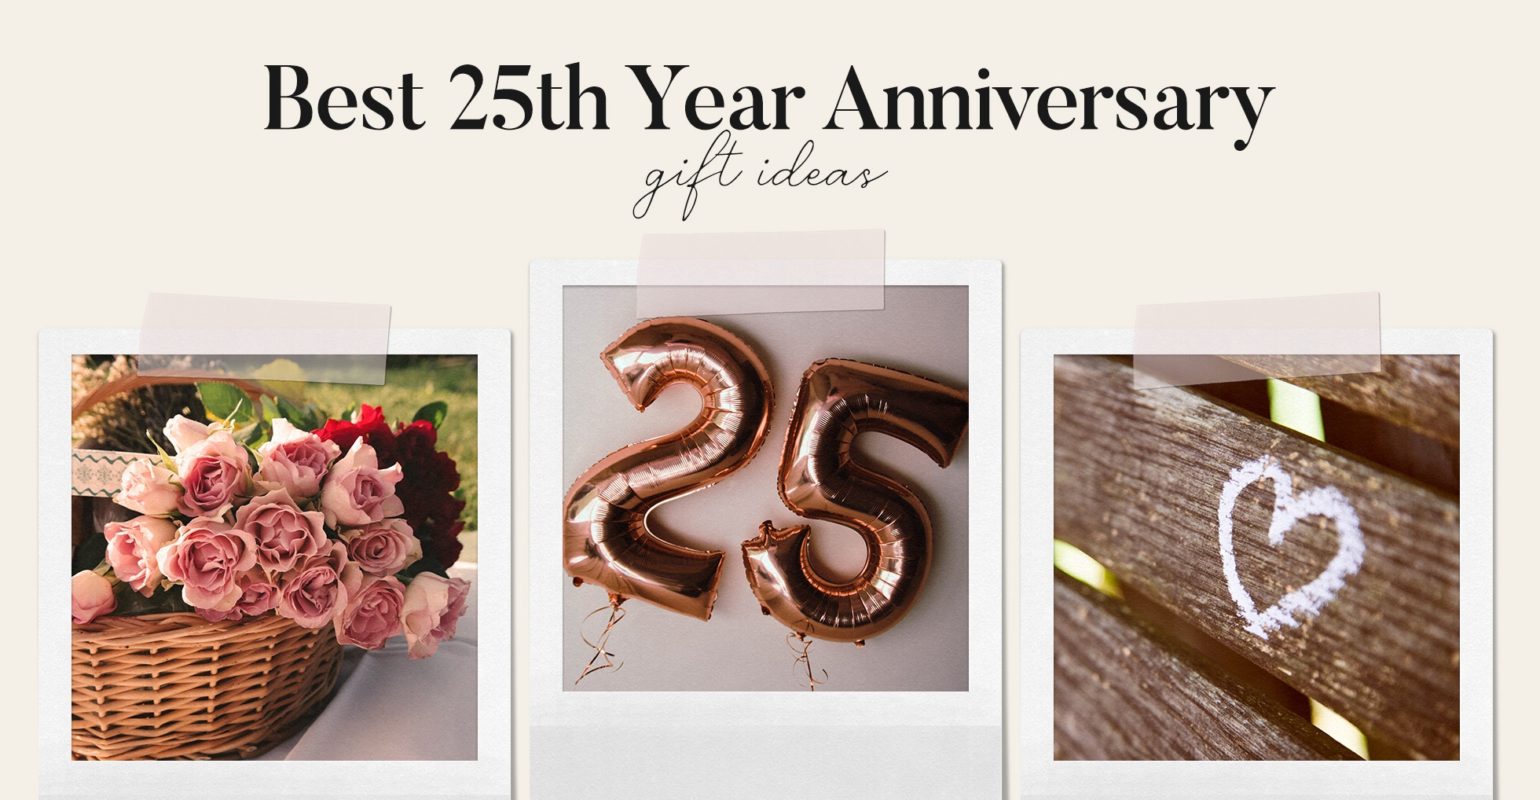 Best 25th Year Anniversary Gift Ideas